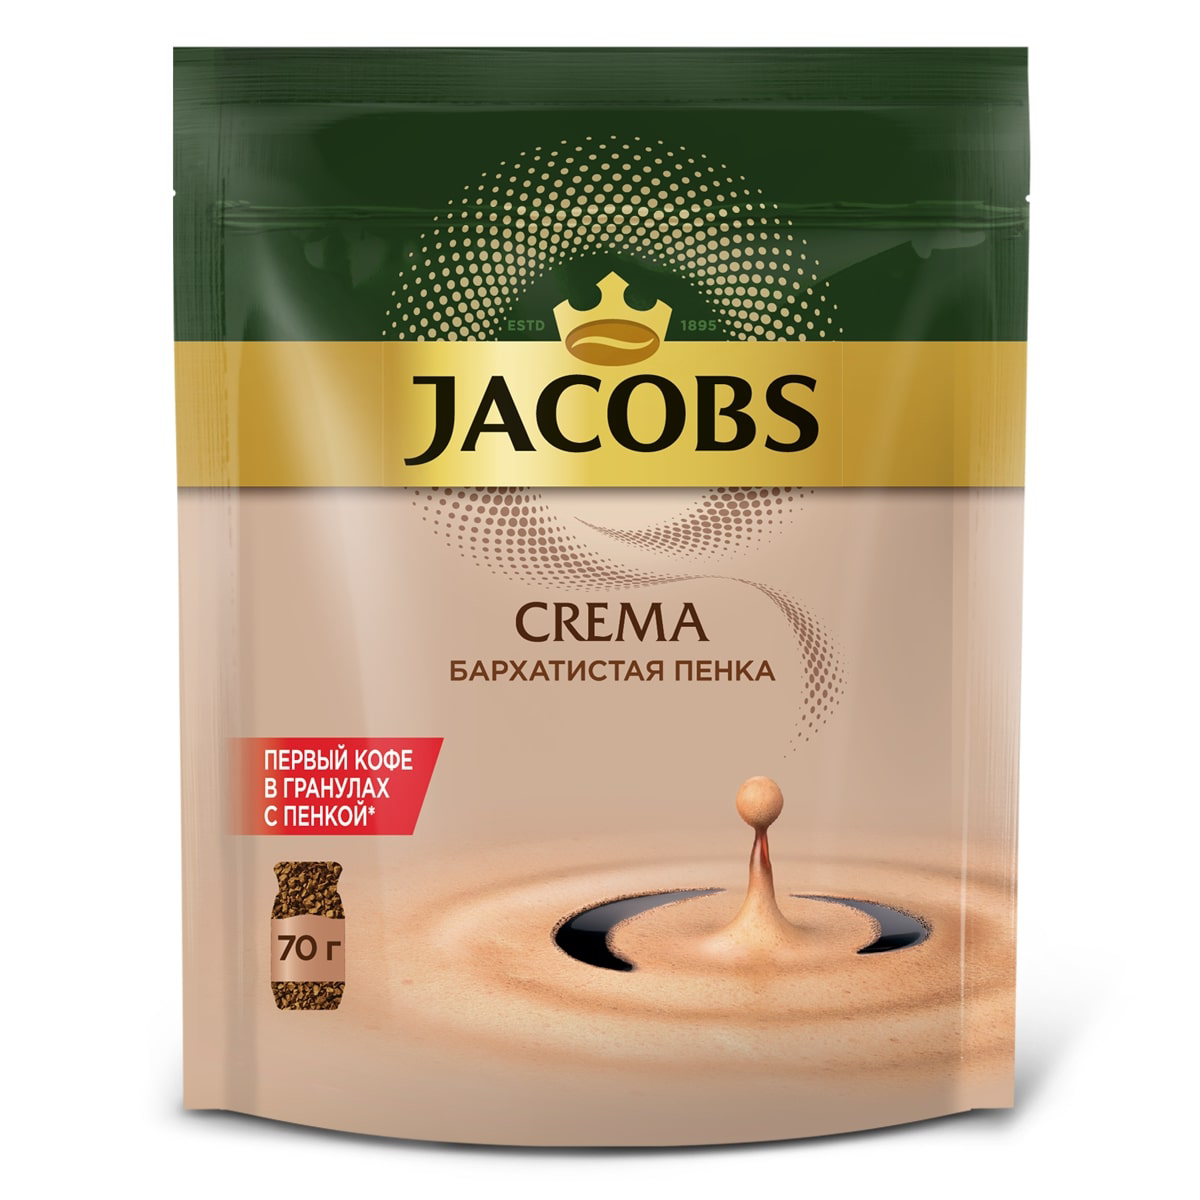 Jacobs crema 70 г